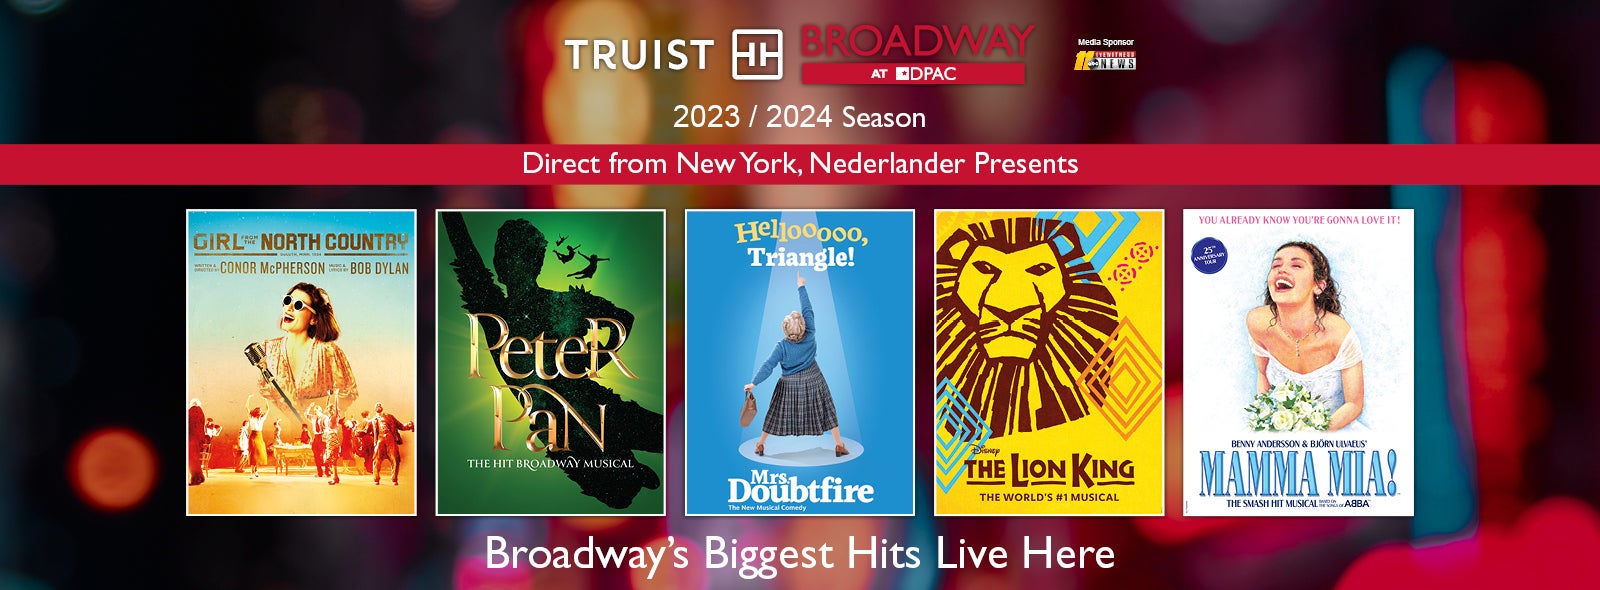 Broadway Season Truist Broadway's 2023 / 2024 Season DPAC Official Site